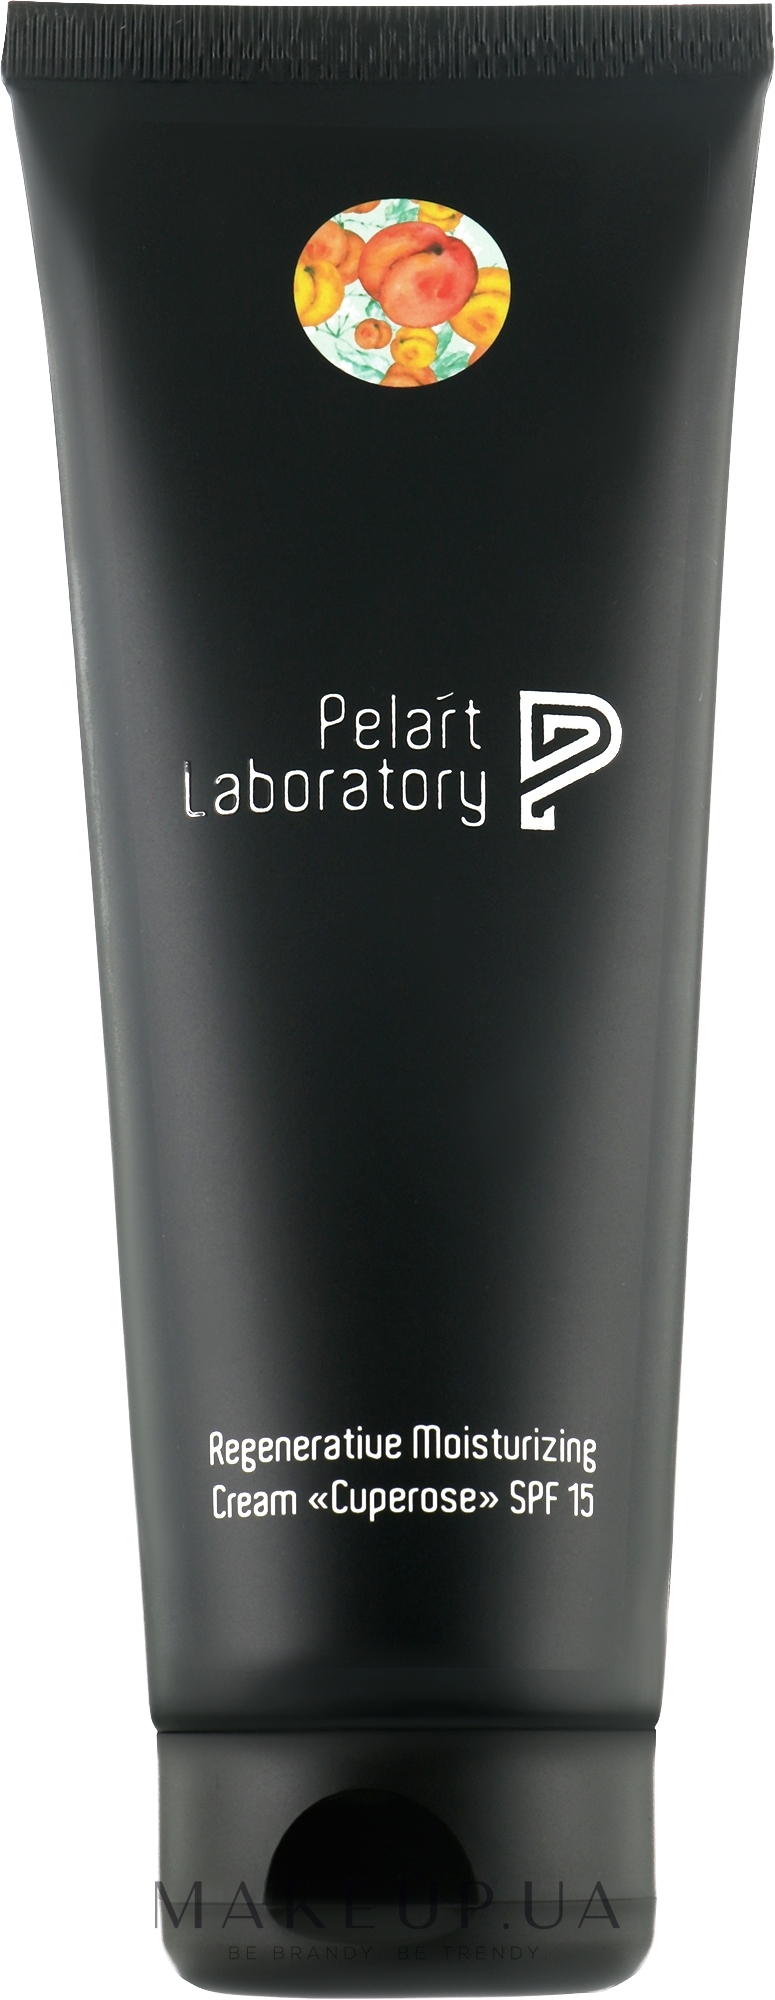 Восстанавливающий крем "Купероз" для лица - Pelart Laboratory Regenerative Moisturizing Cream Cuperose SPF15 — фото 250ml